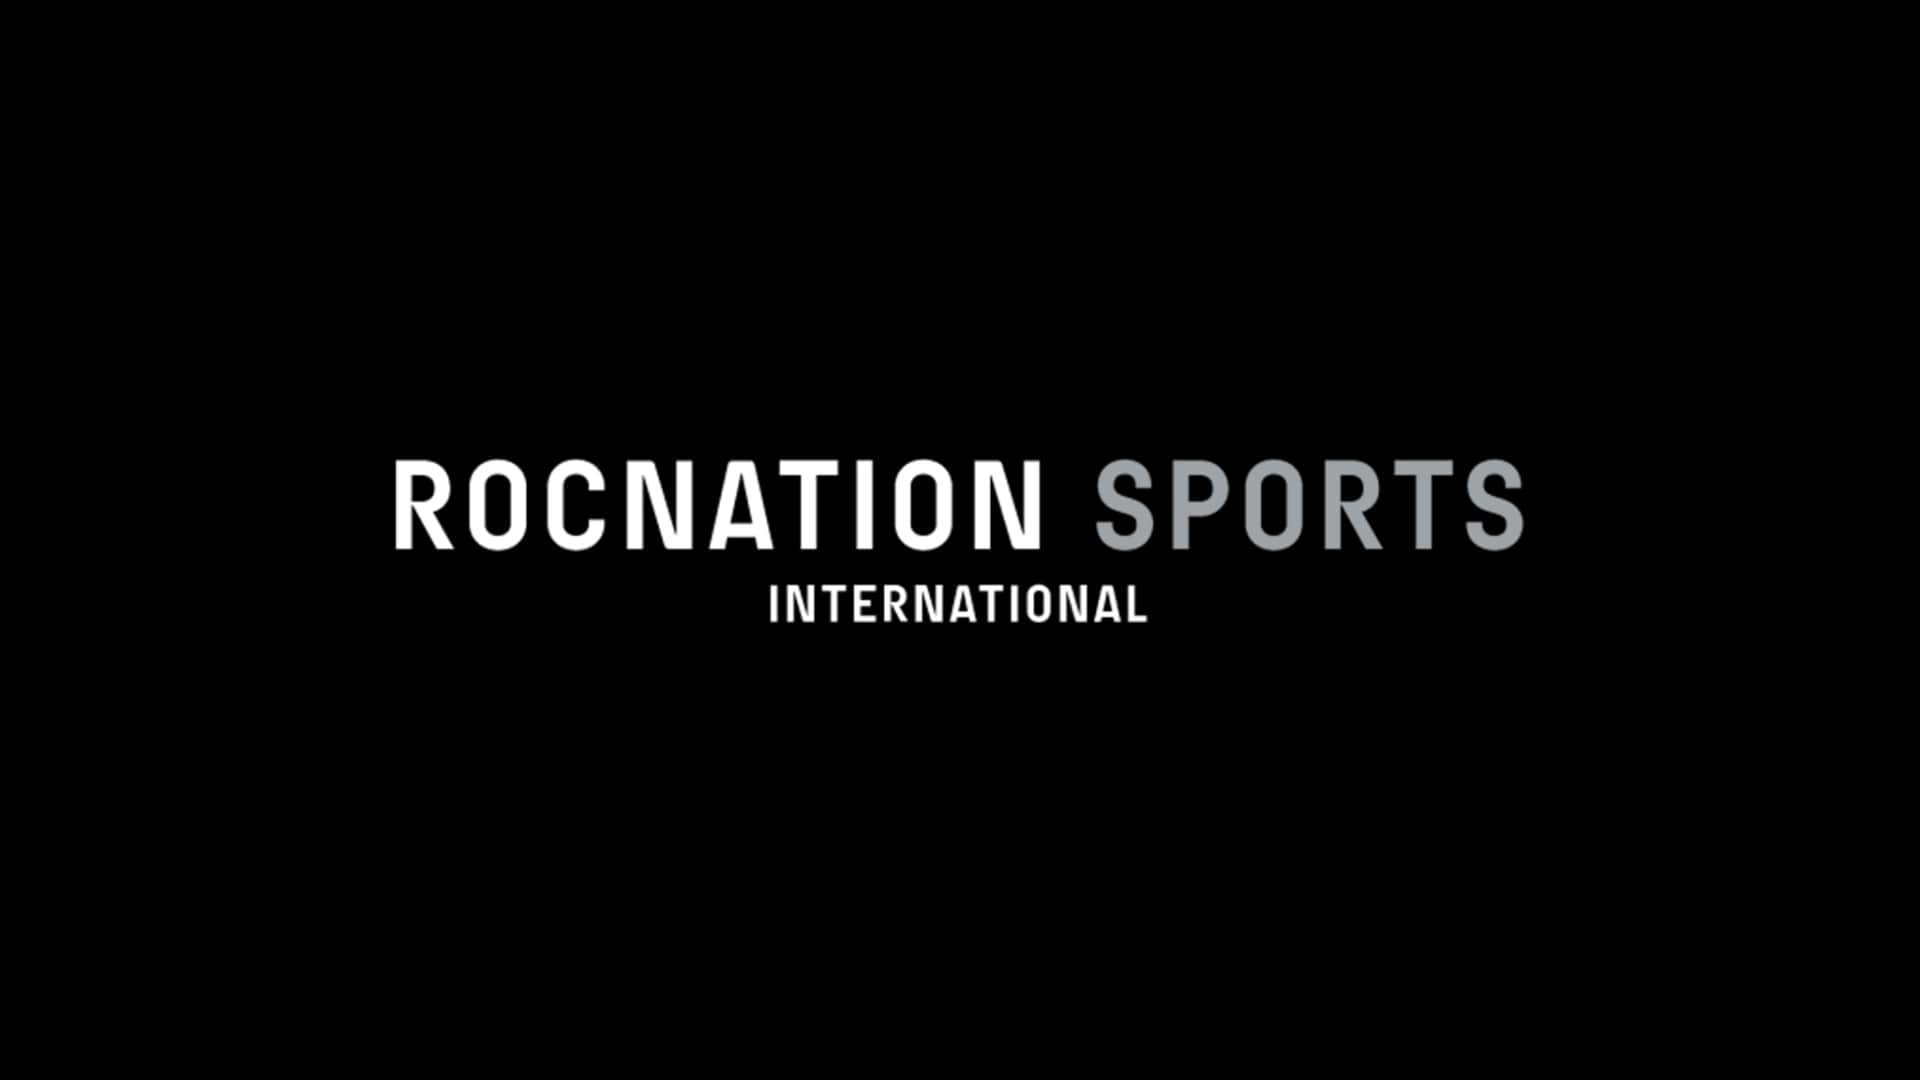 roc nation sports international jay-z